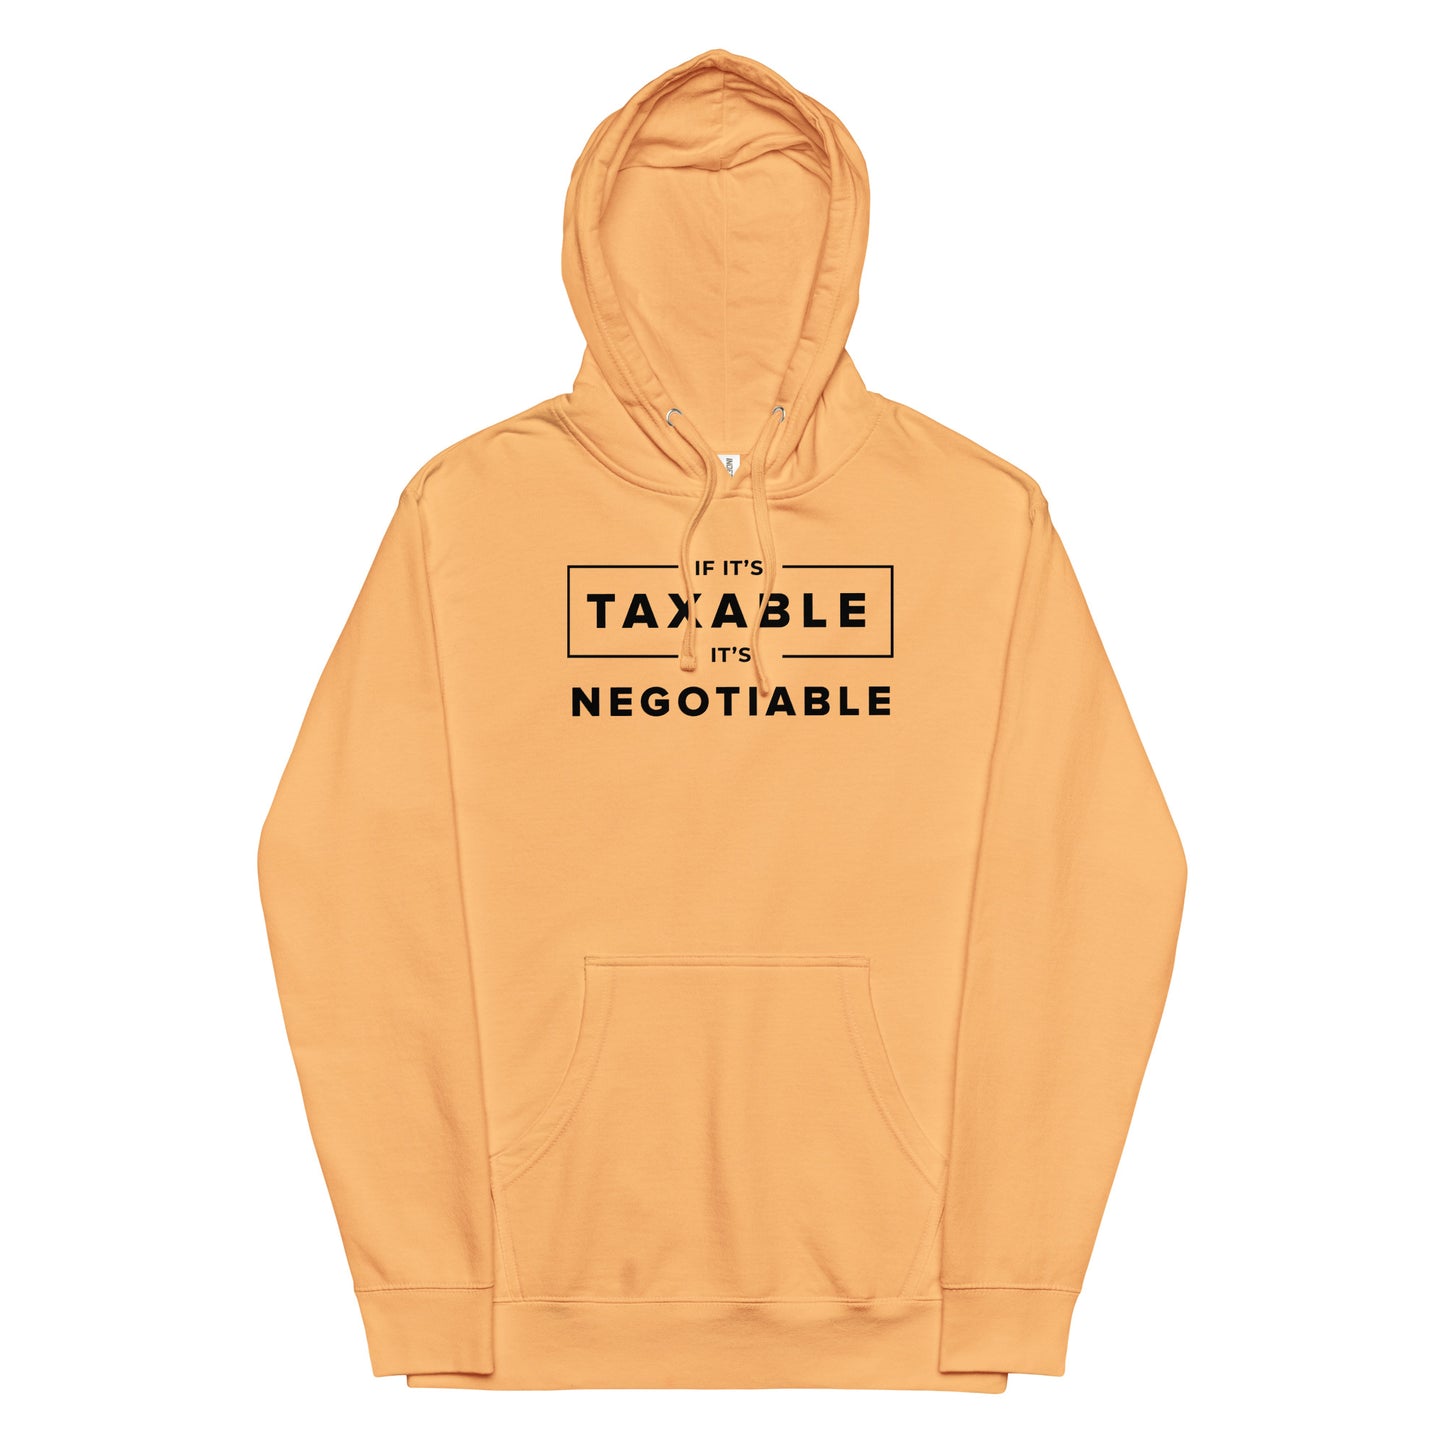 If it's taxable, it's negotiable - hoodie - original - dark